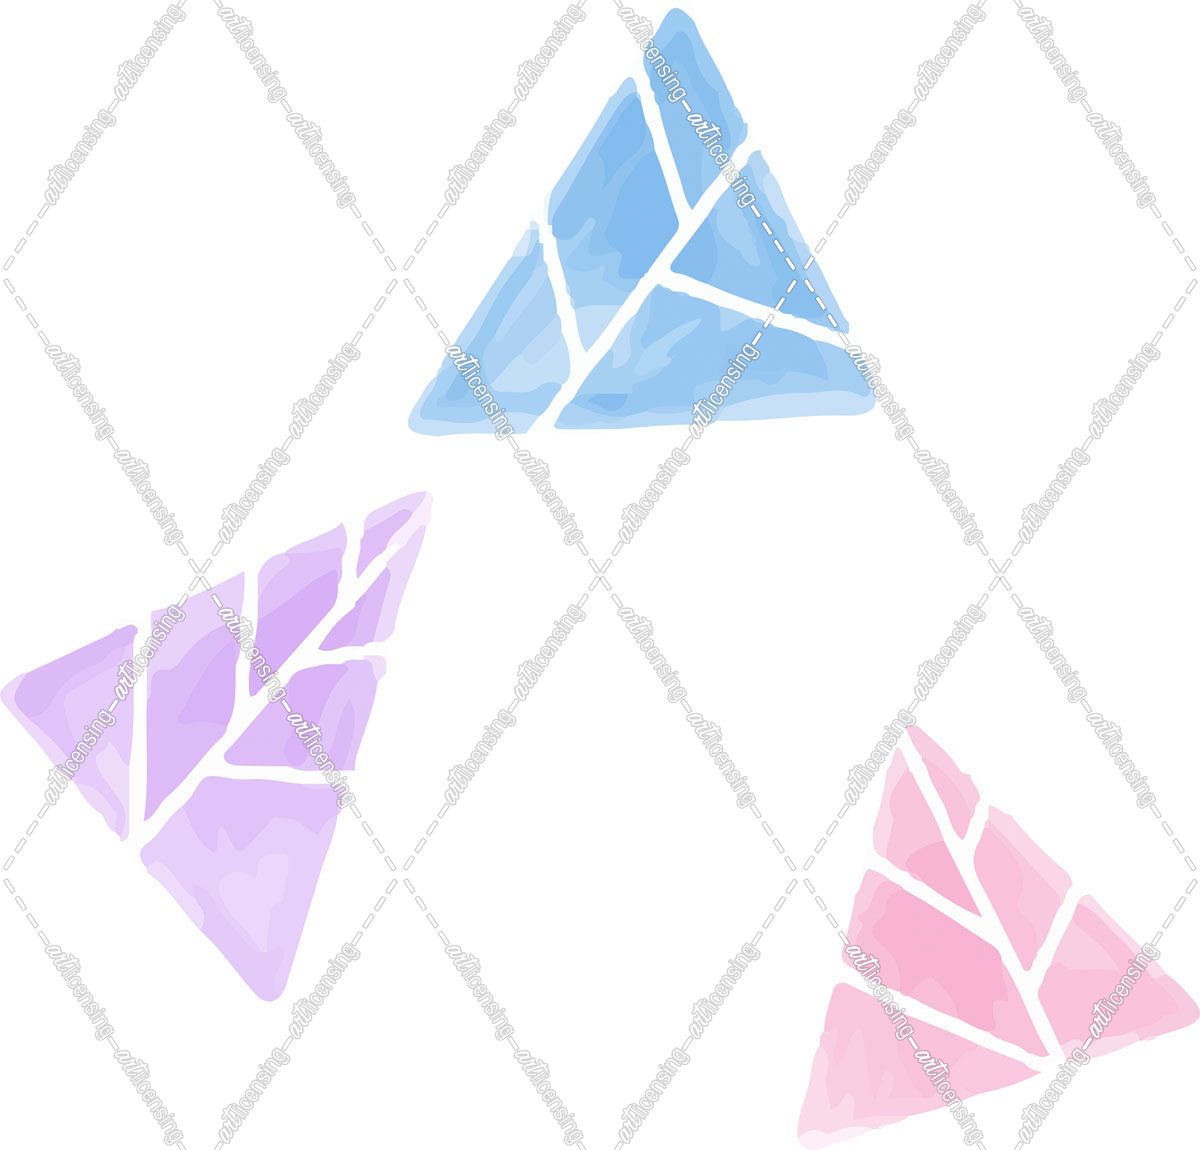 Geometric Crystal Triangle